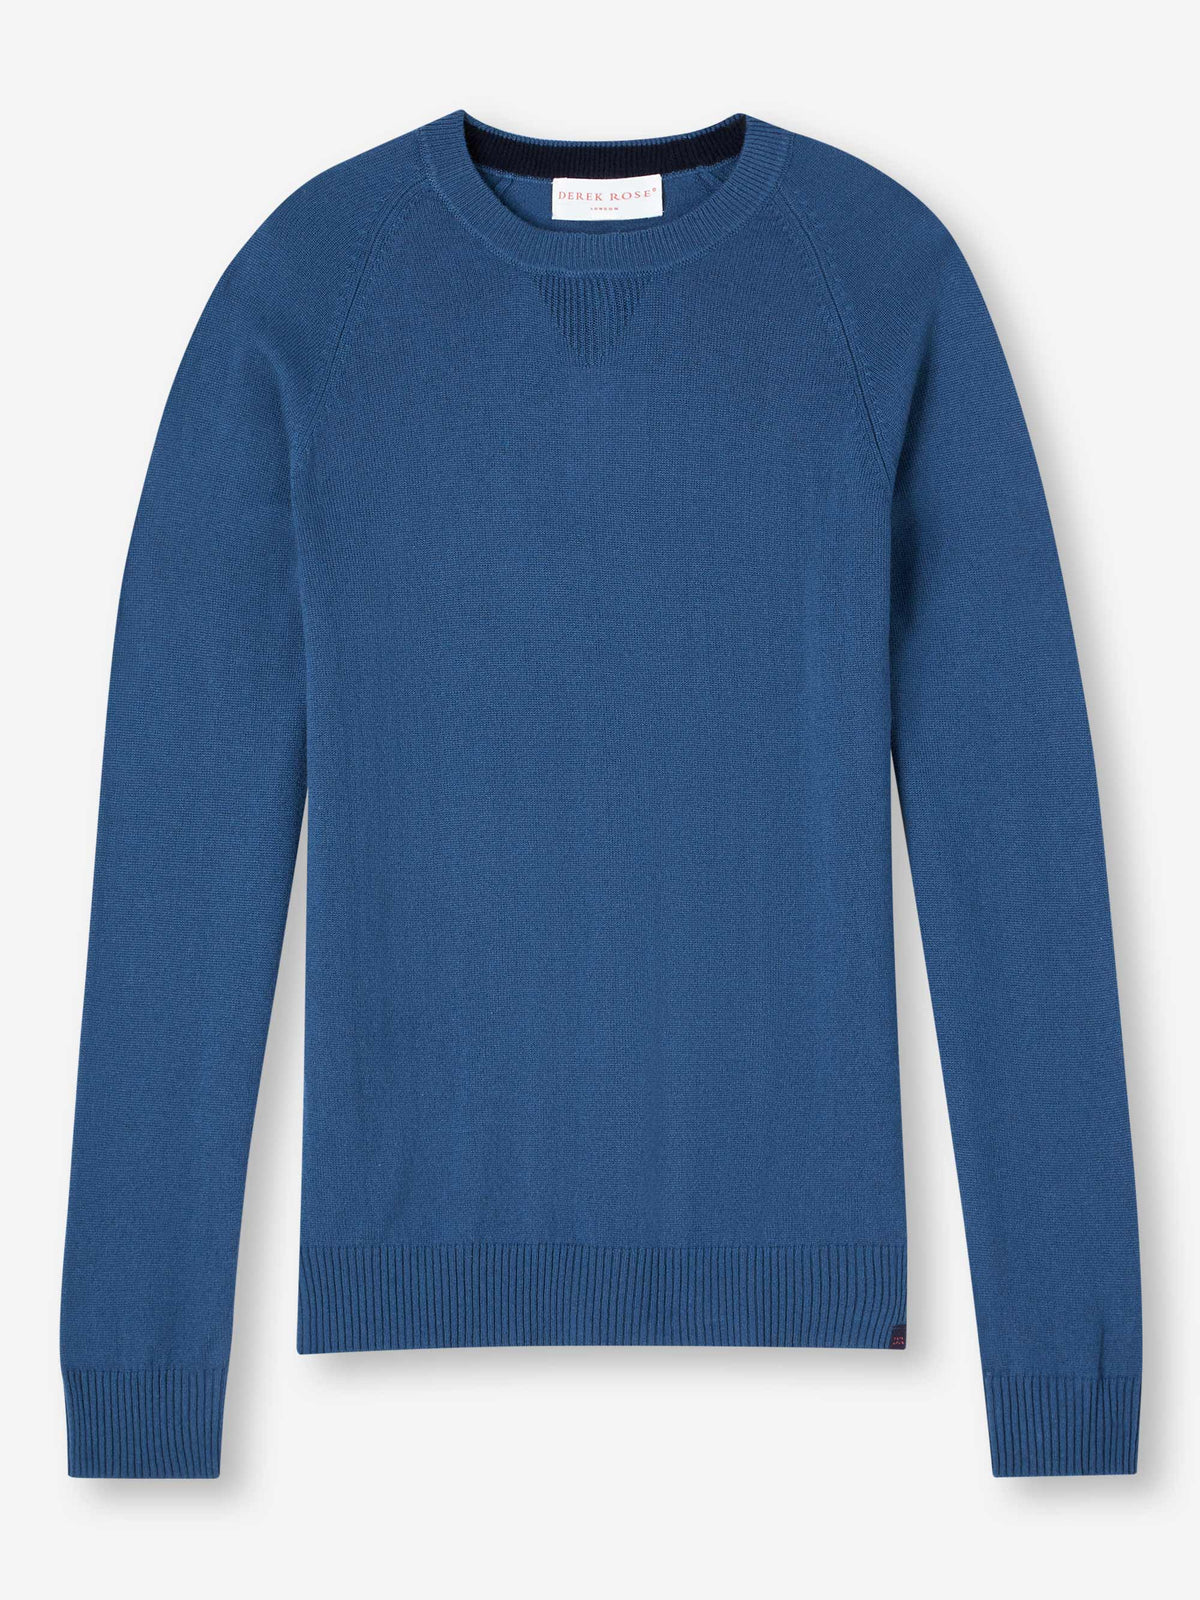 Men's Sweater Finley Cashmere Denim